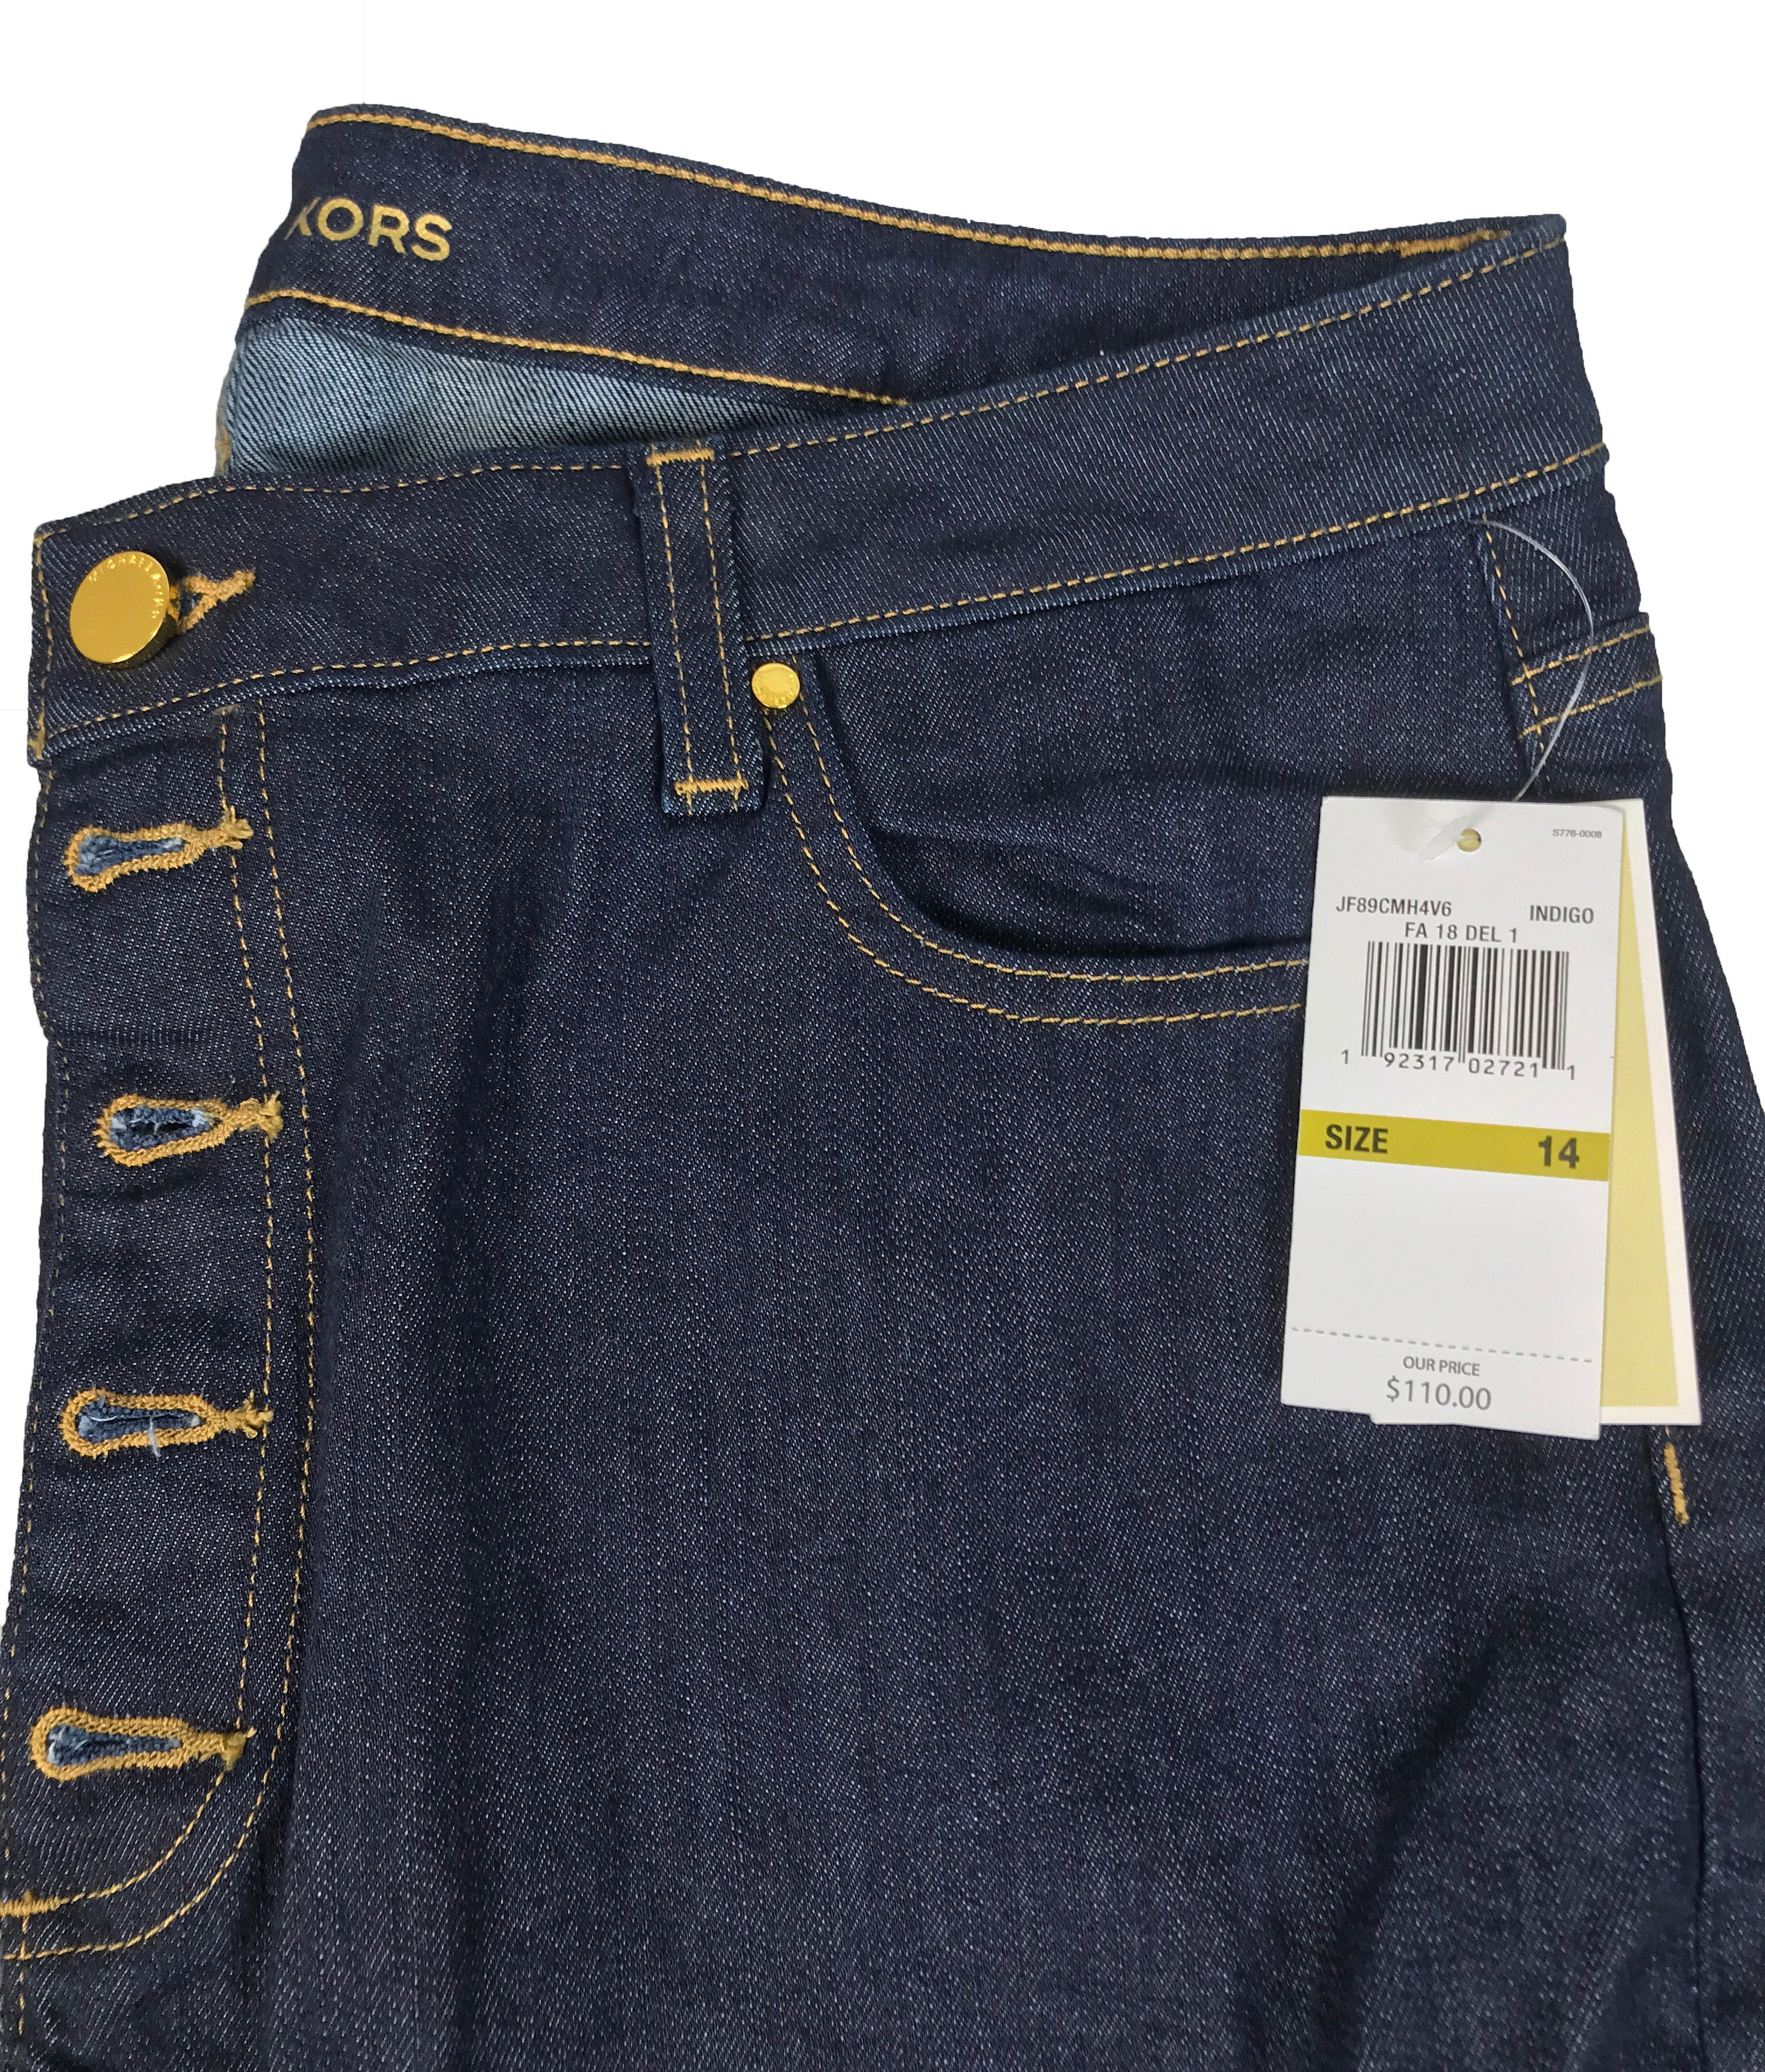 Michael Kors Jeans Women's Size 14